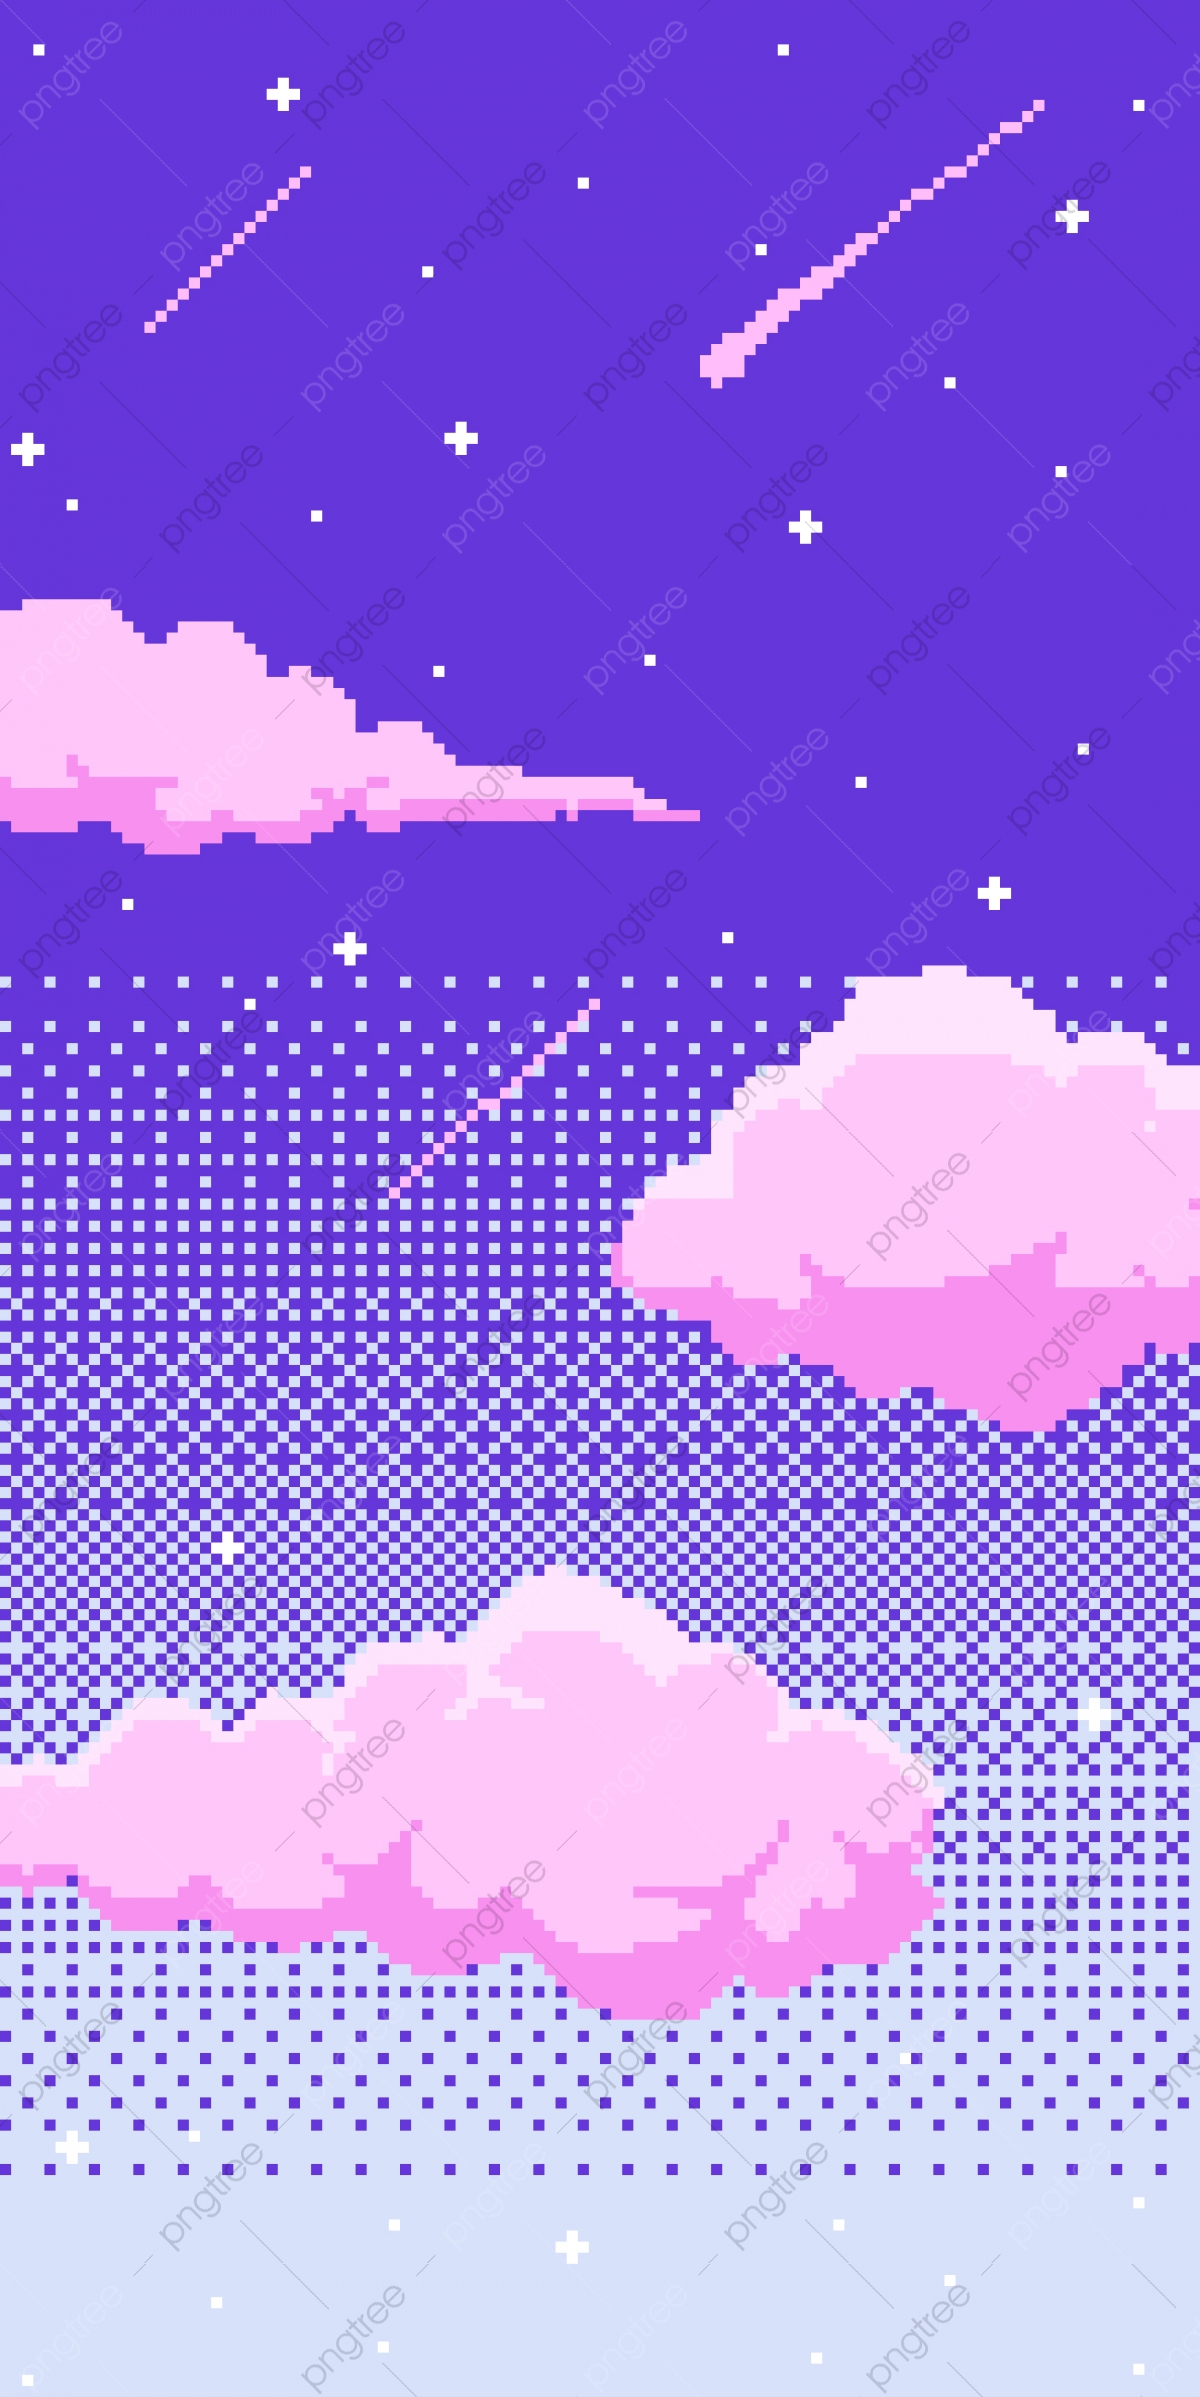 Kawaii Pixel Wallpapers